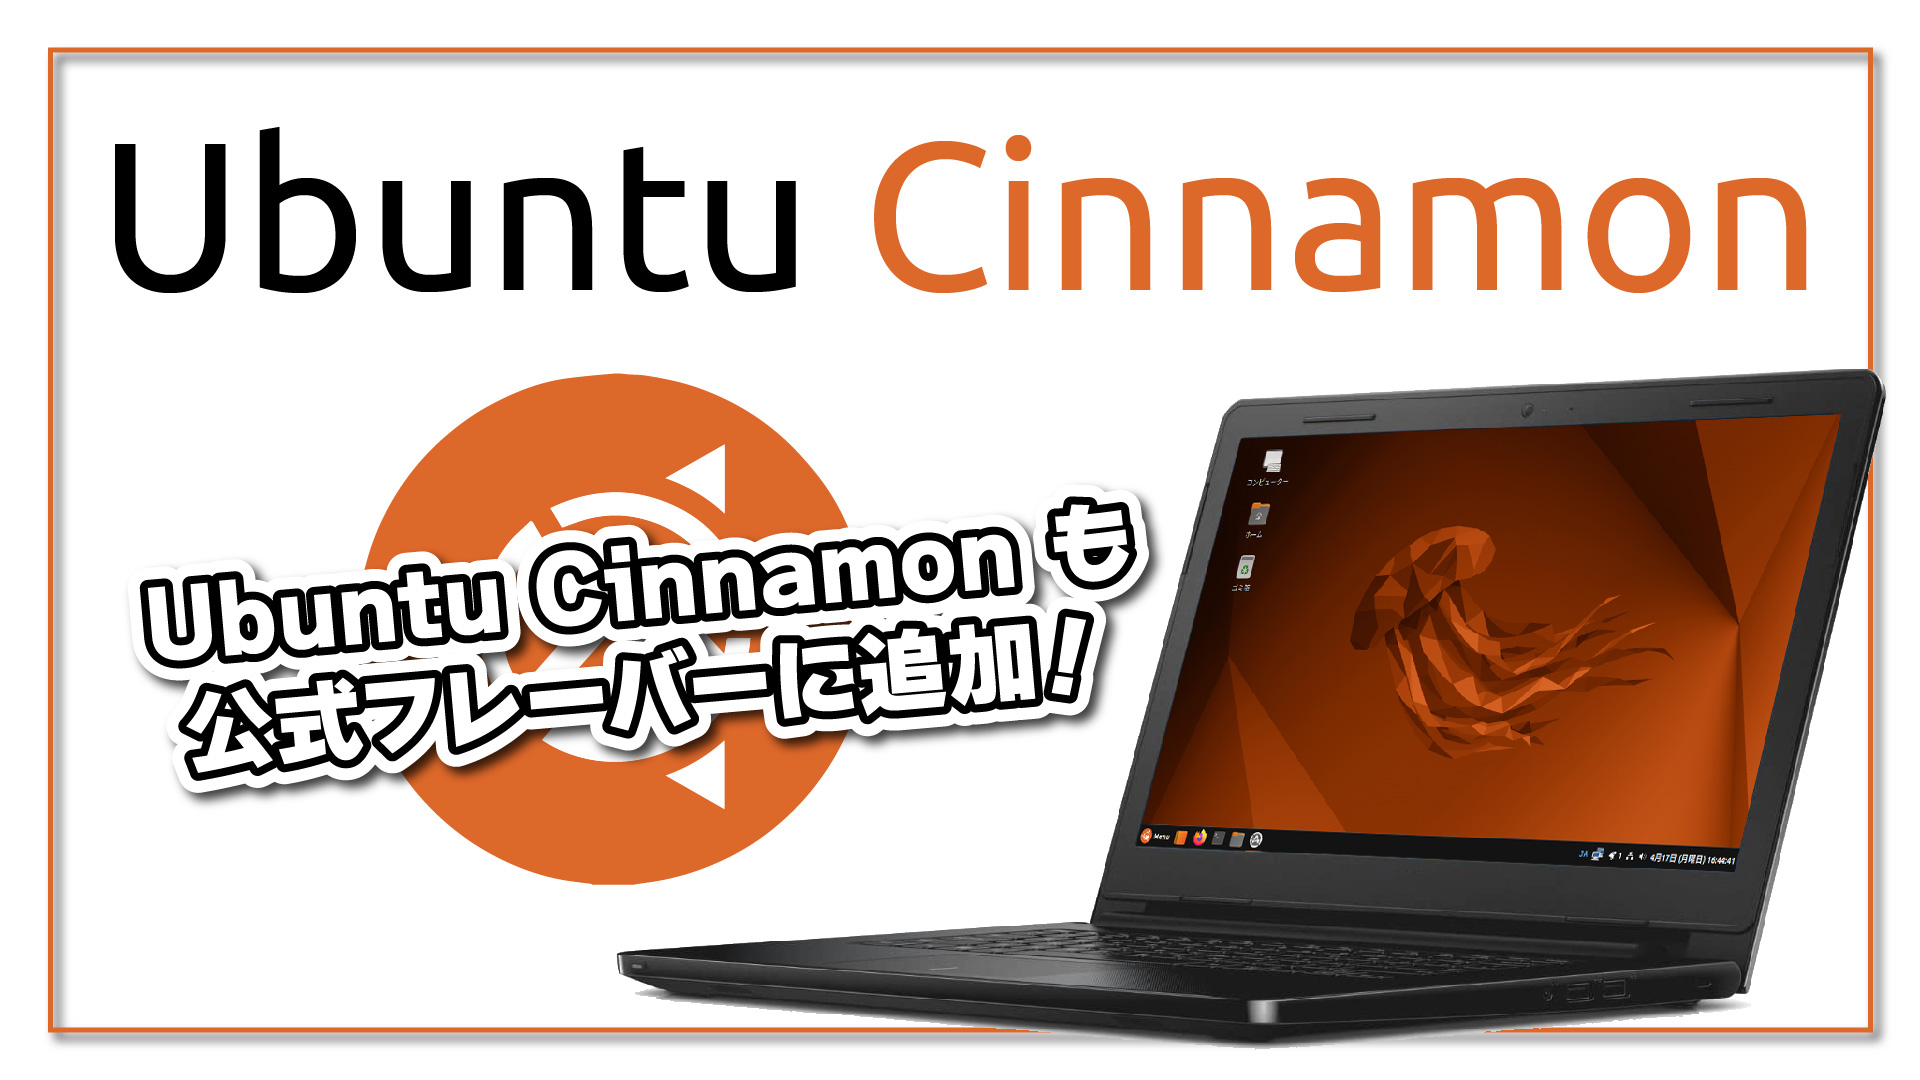 Ubuntu Cinnamon も公式フレーバーに追加されます！